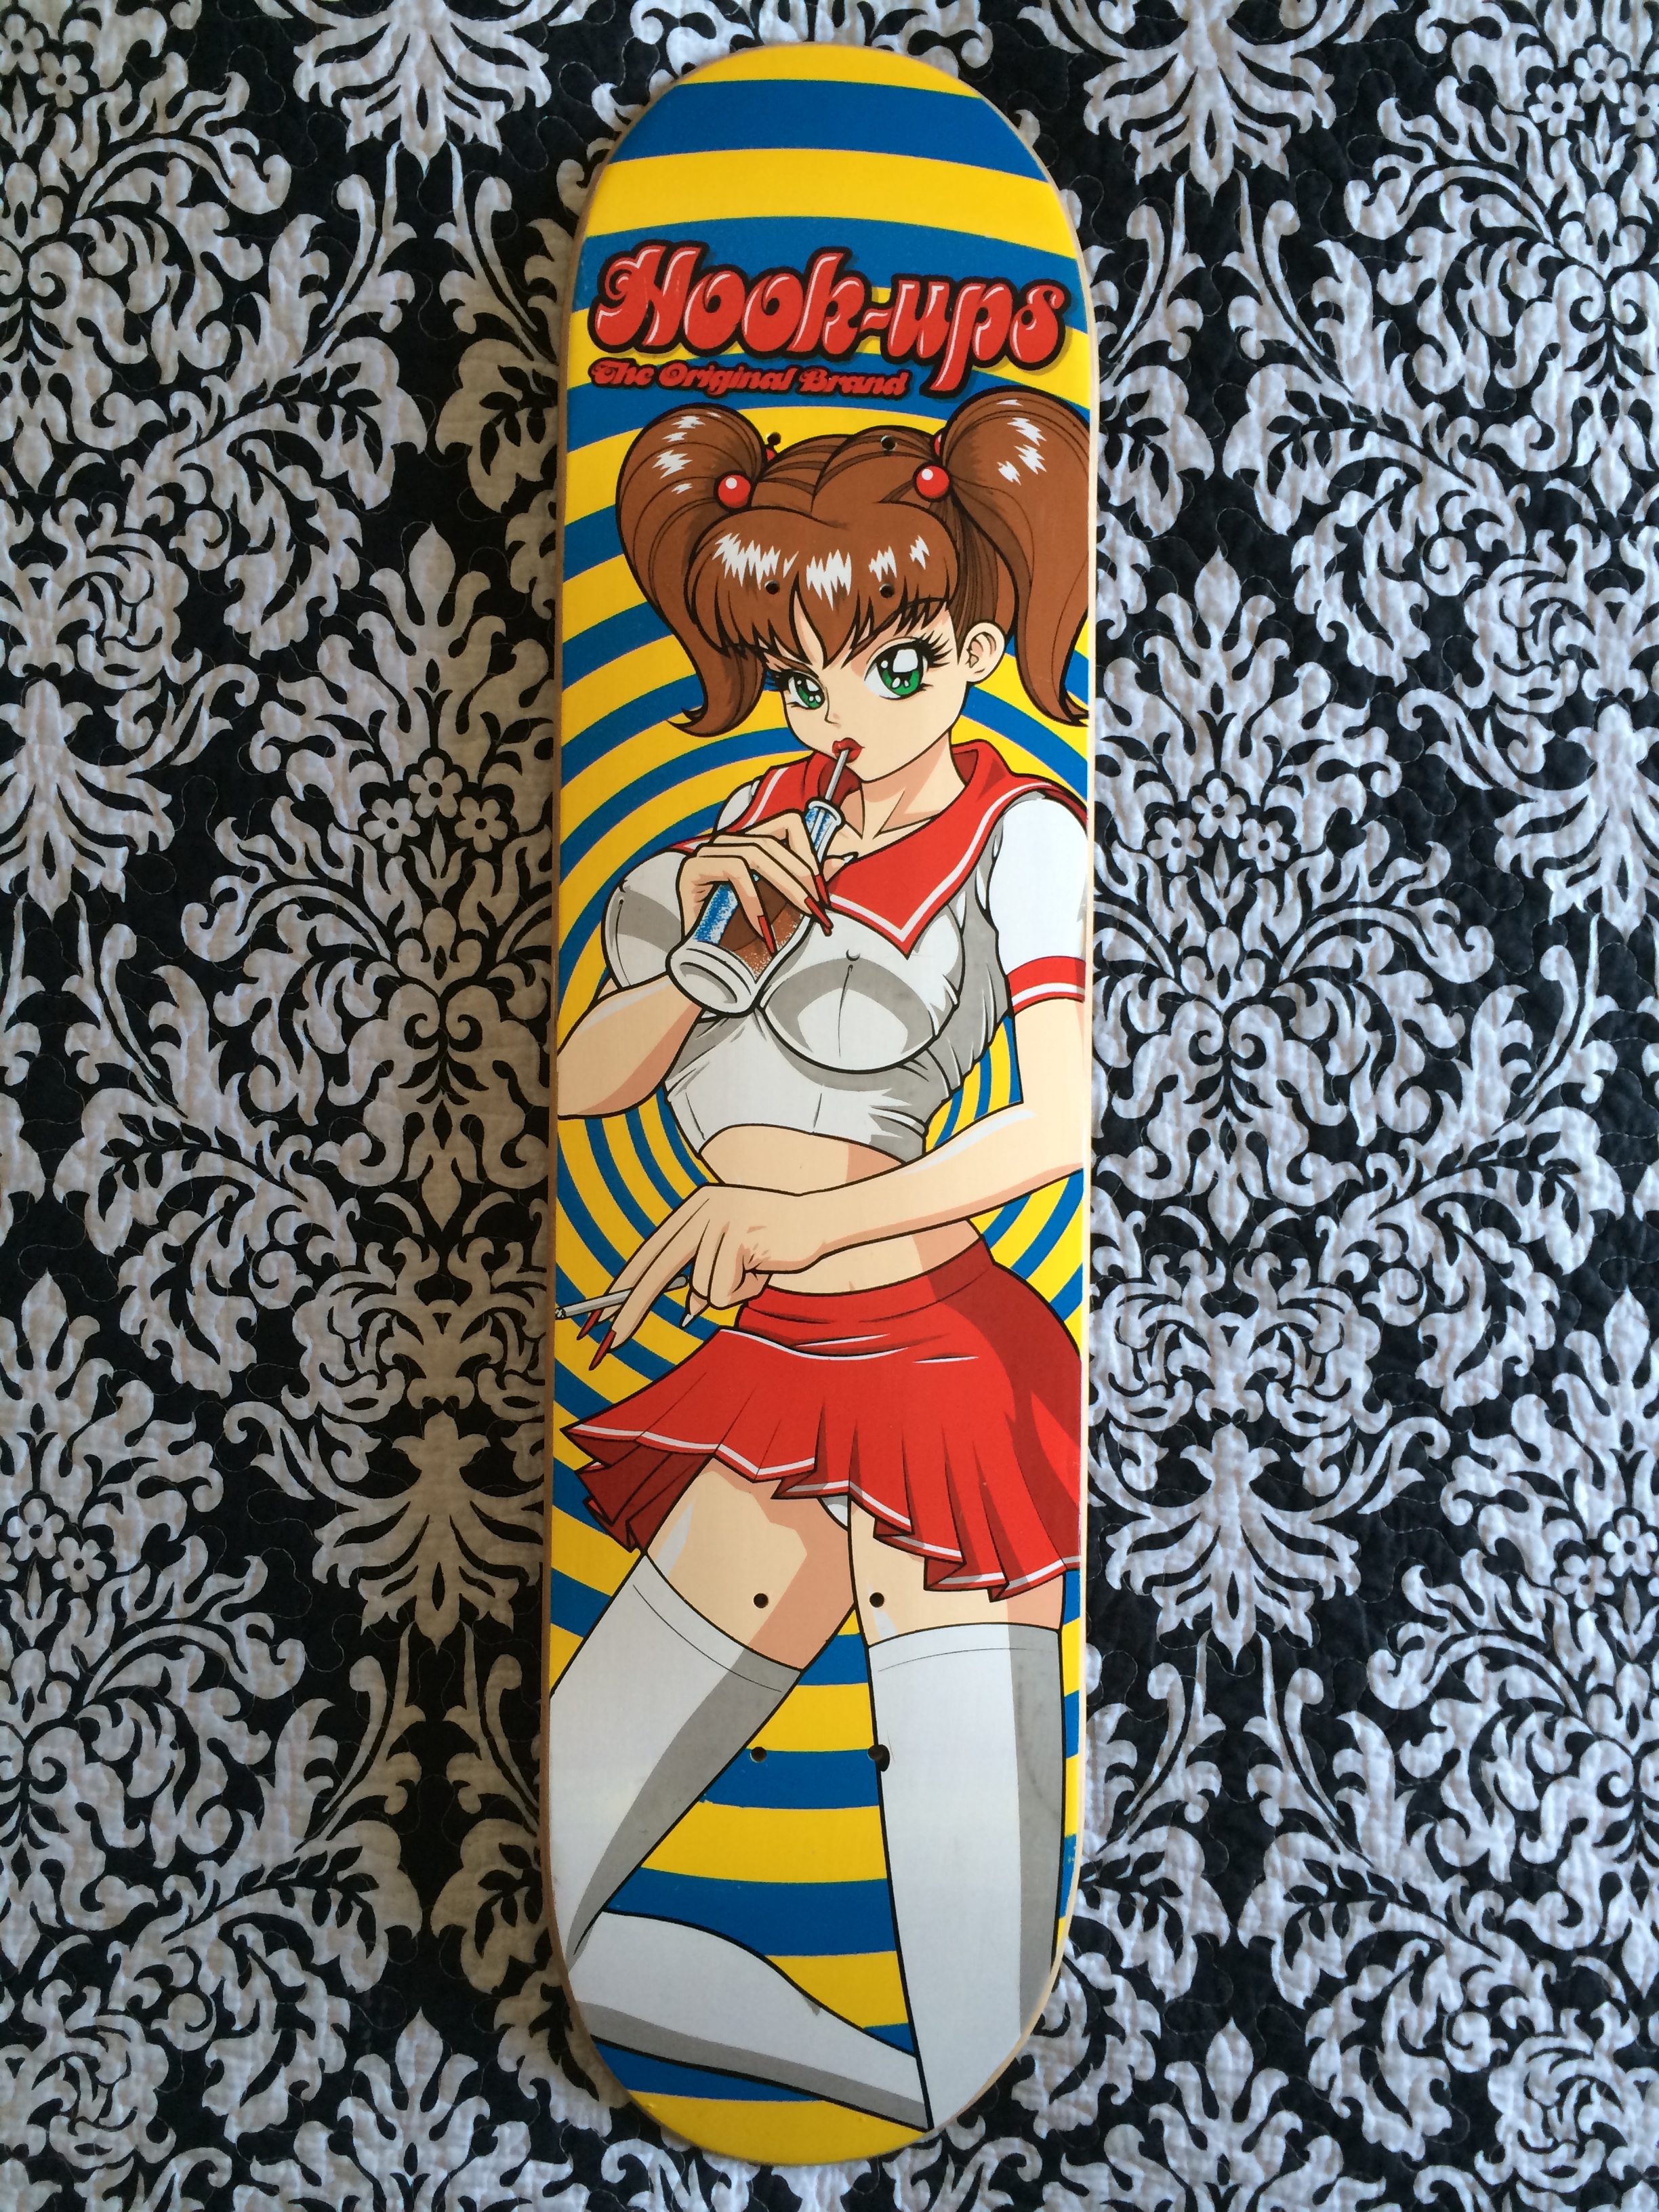 Hook-ups Cat Girl Anime Skateboard Deck low-key luxury connotation.